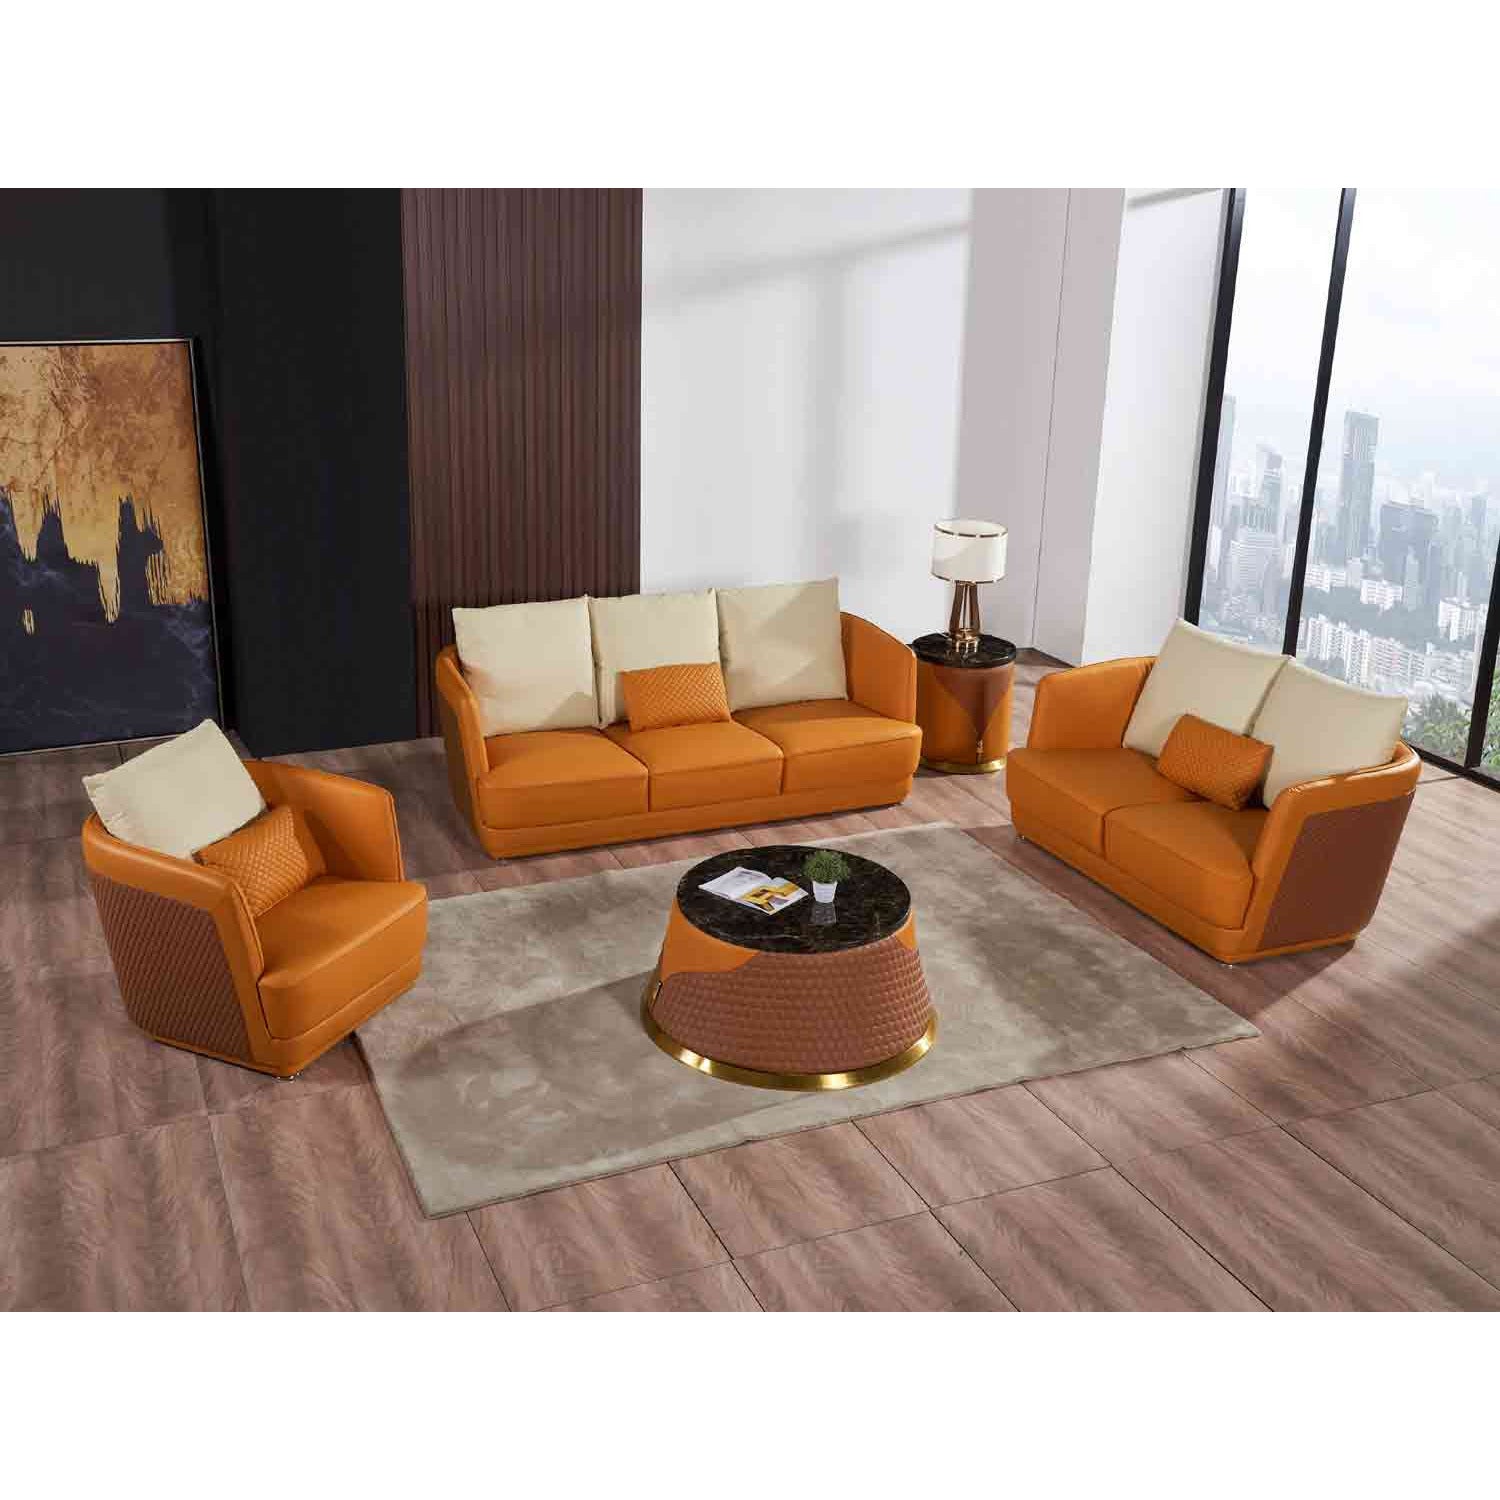 European Furniture - Glamour Chair in Orange-Brown - 51619-C - New Star Living